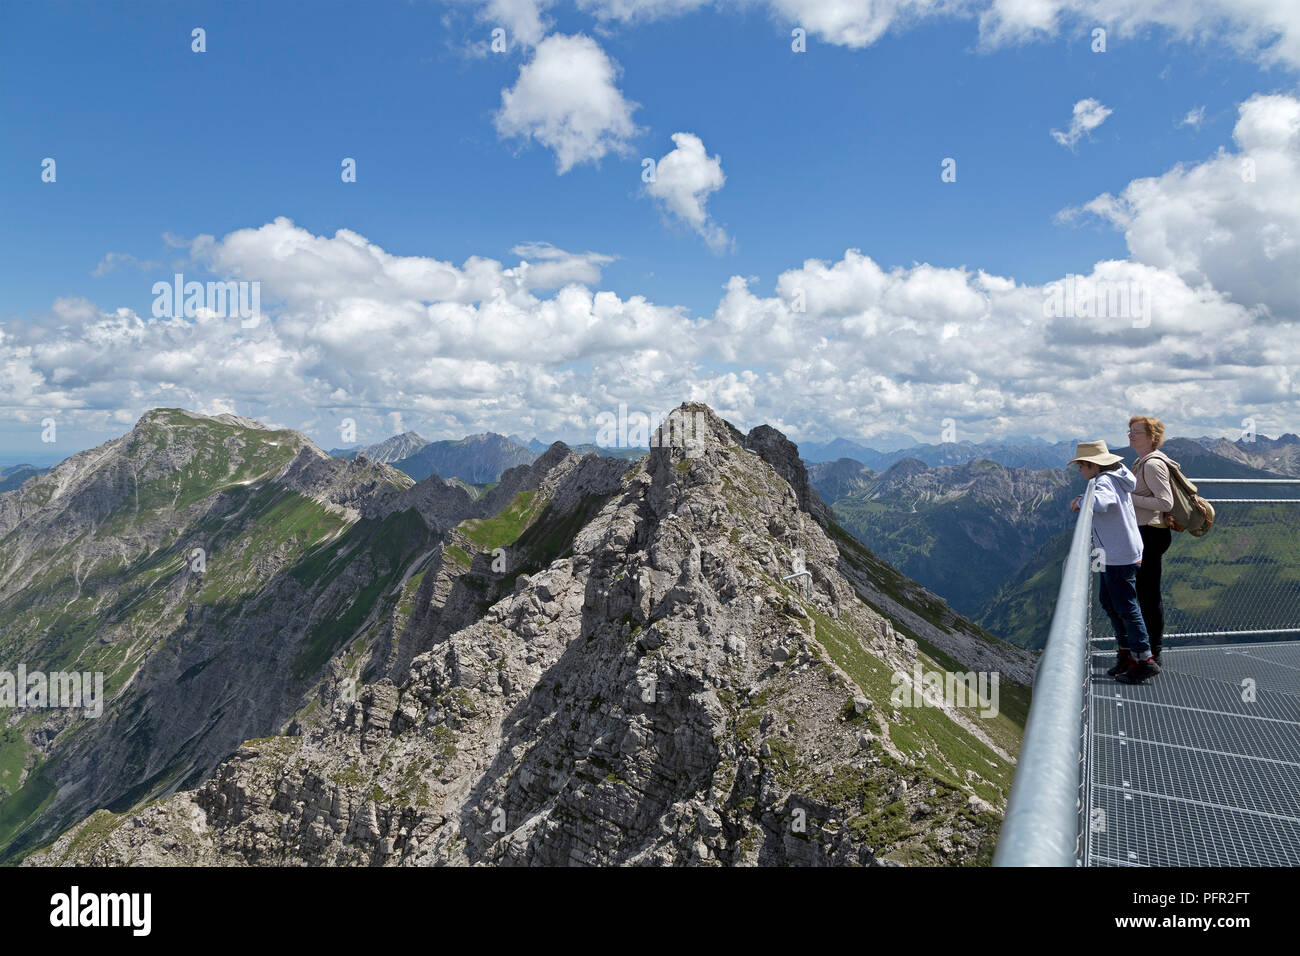 https://c8.alamy.com/comp/PFR2FT/nordwandsteig-nebelhorn-summit-oberstdorf-allgaeu-bavaria-germany-PFR2FT.jpg